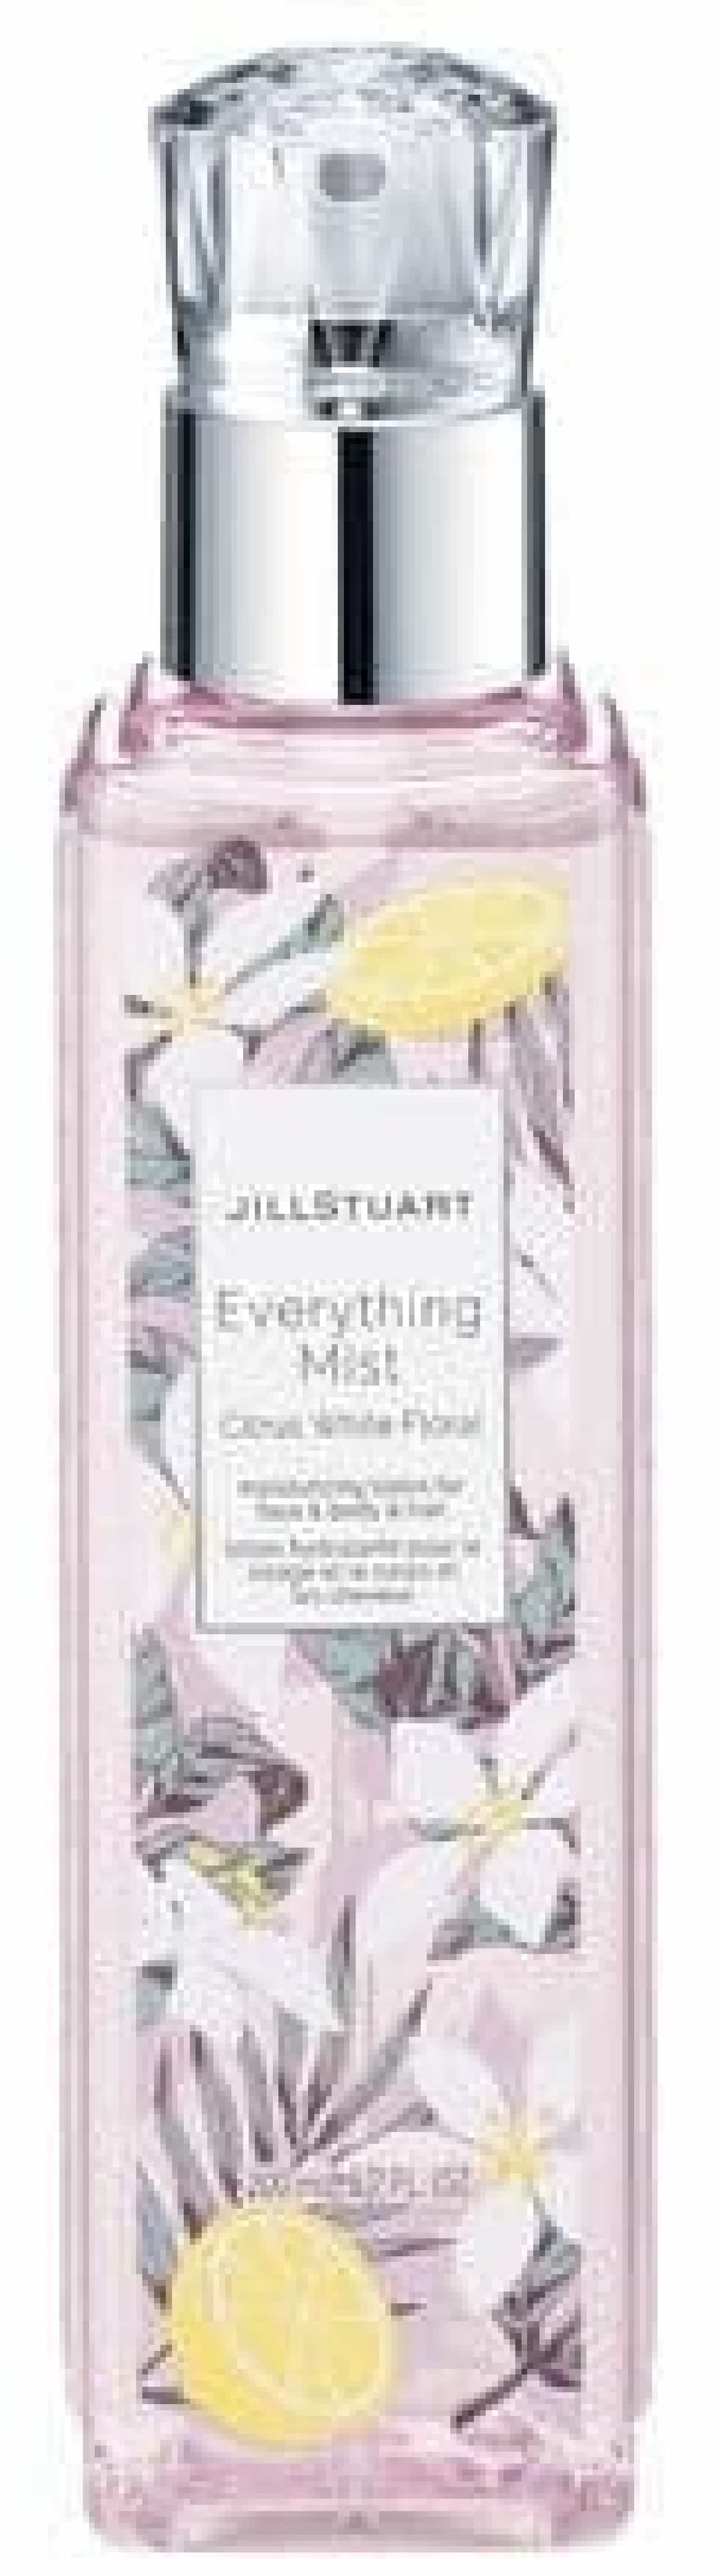 Jill Stuart Everything Mist Citrus White Floral